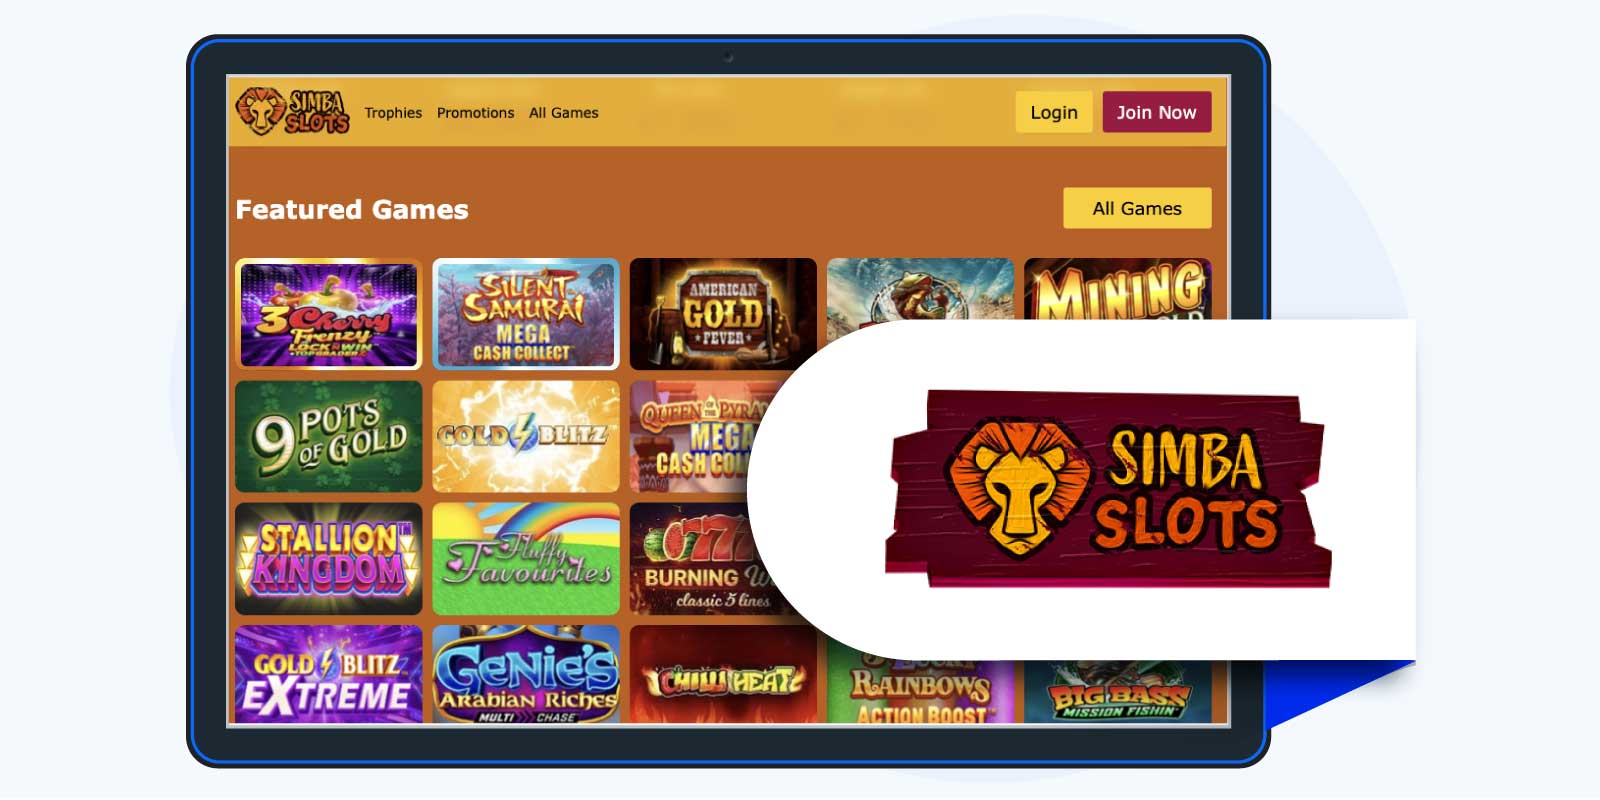 Simba Slots Casino – 5 free spins no deposit